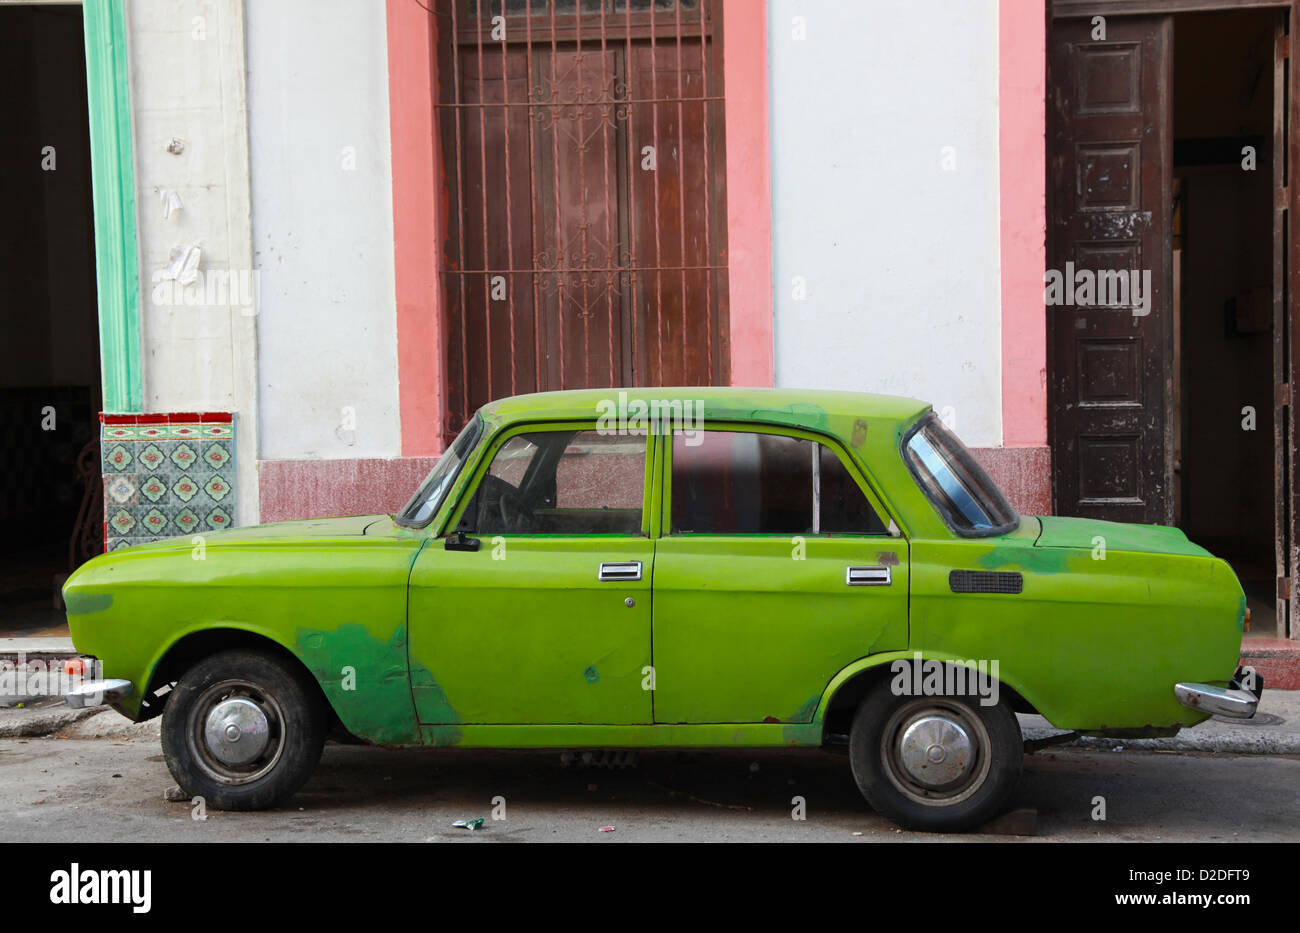 Classic American auto d'epoca in Havana Cuba Foto Stock